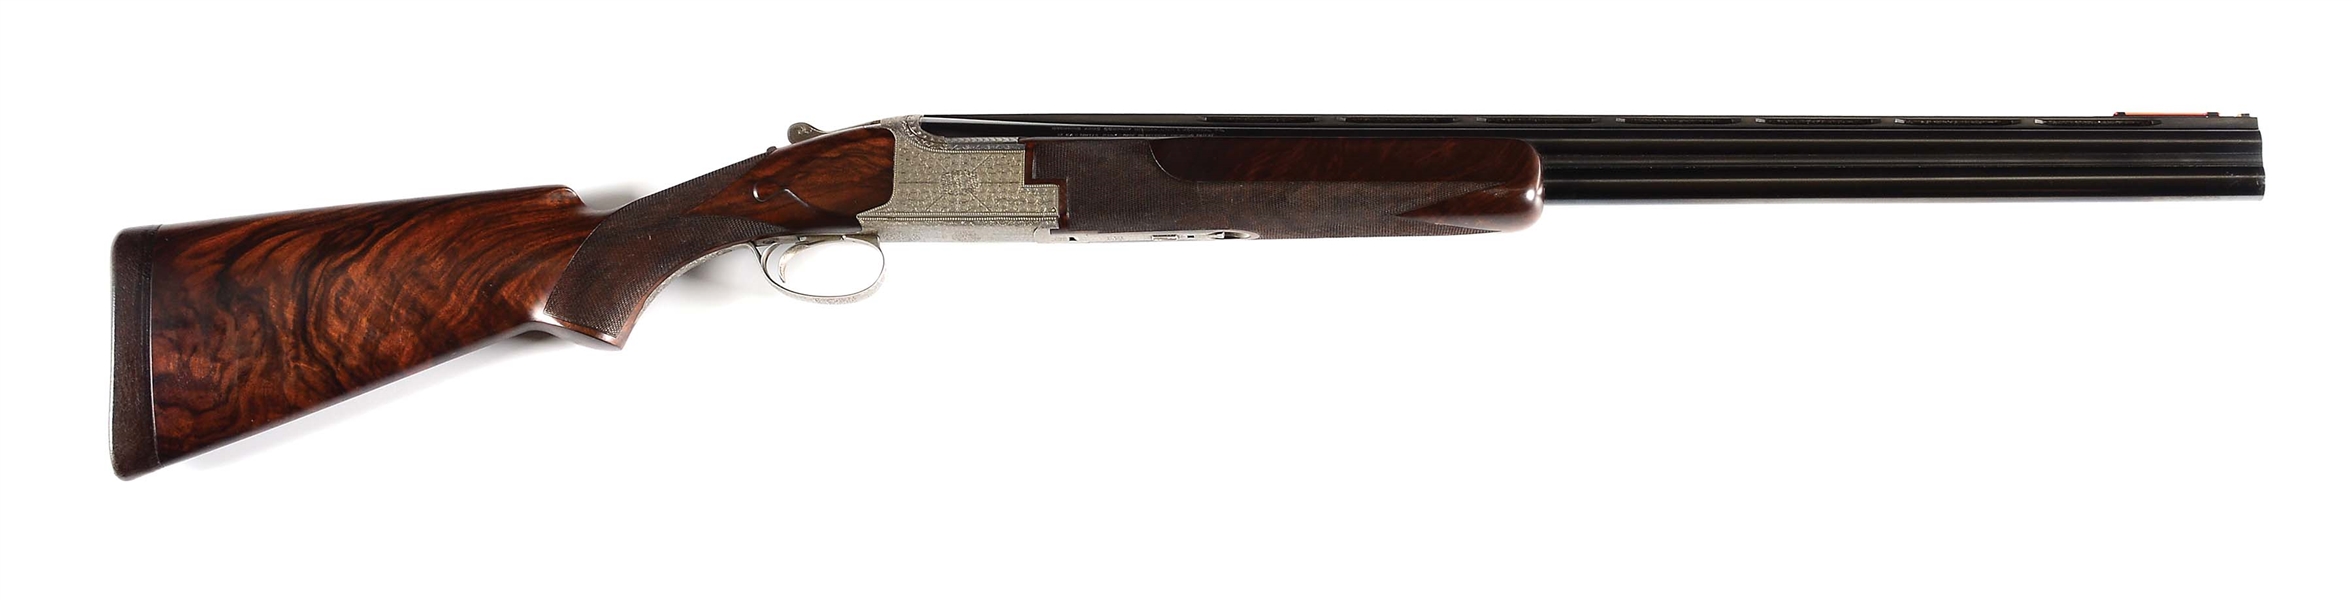 (M) FN B25 12 GAUGE OVER/UNDER SHOTGUN.